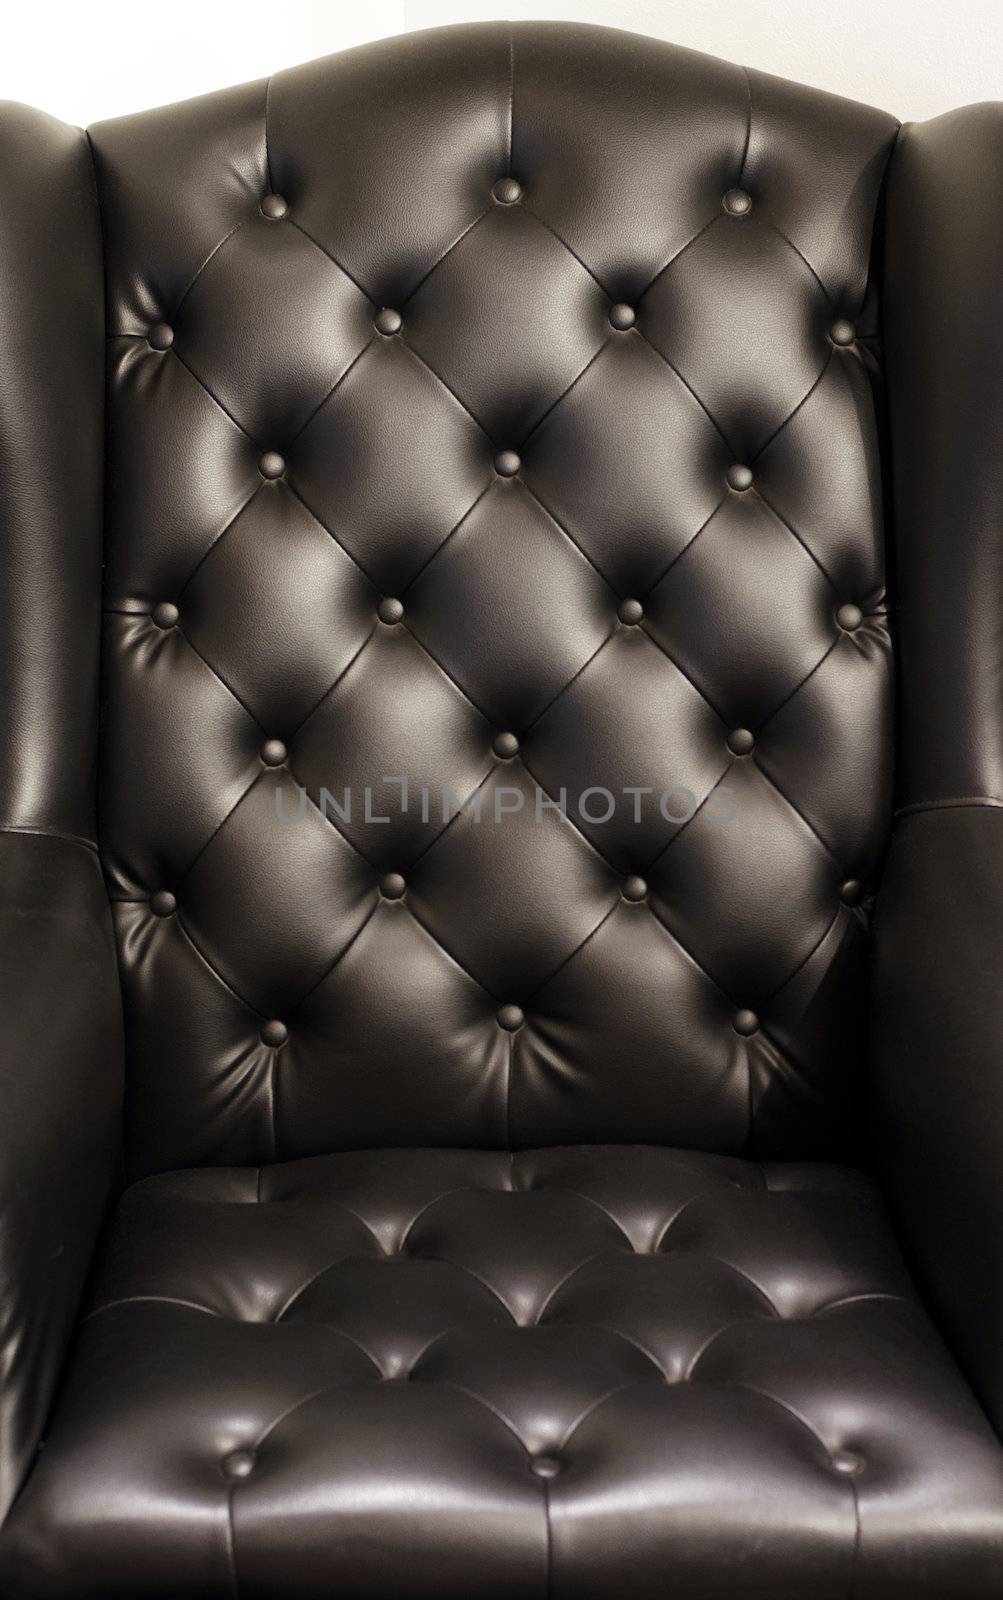 Black genuine leather armchair, luxury furniture